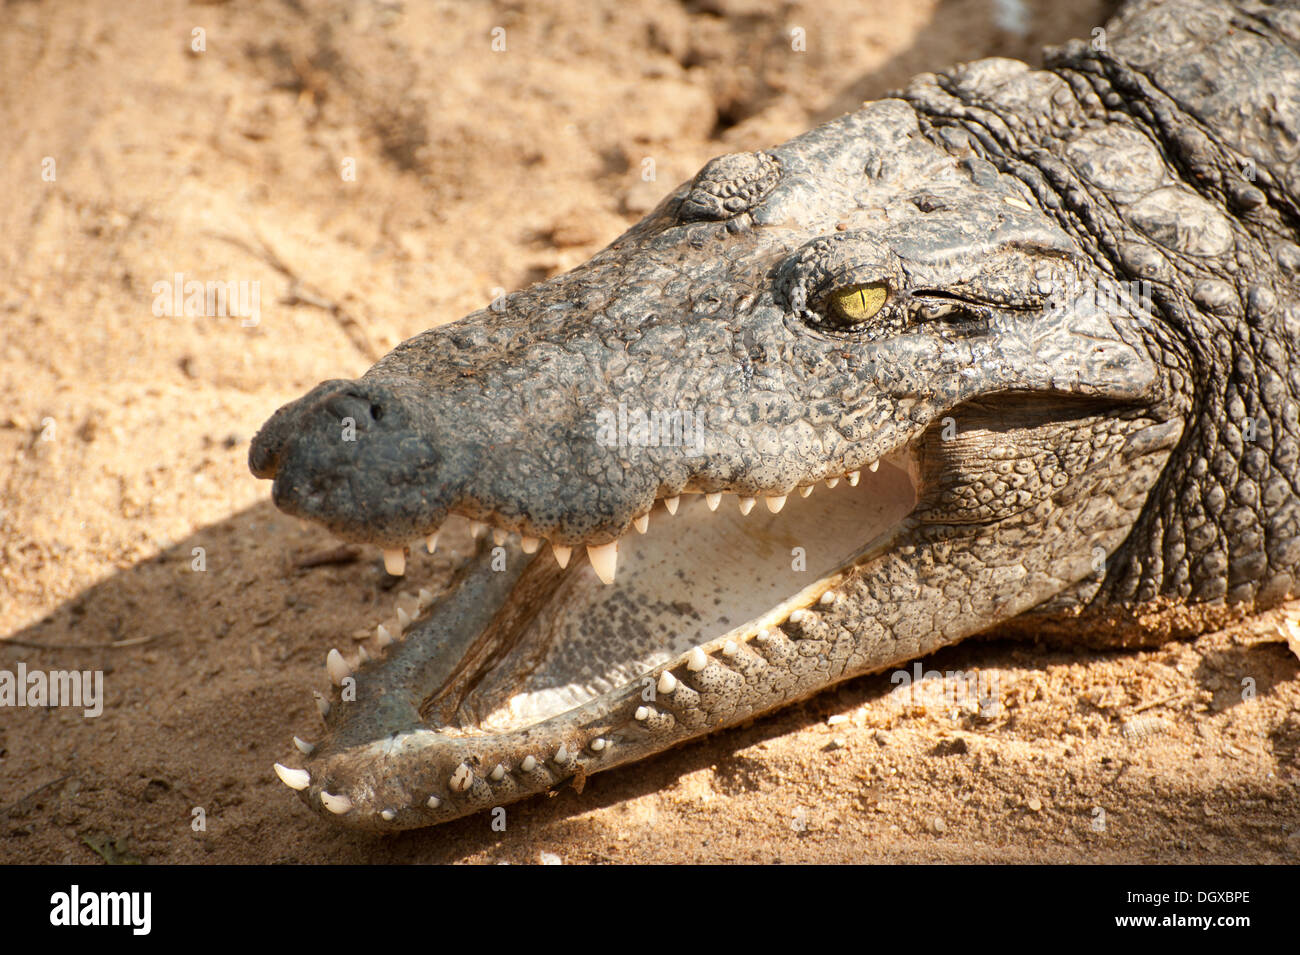 Animals in wild. Сrocodile basking in the sun Stock Photo